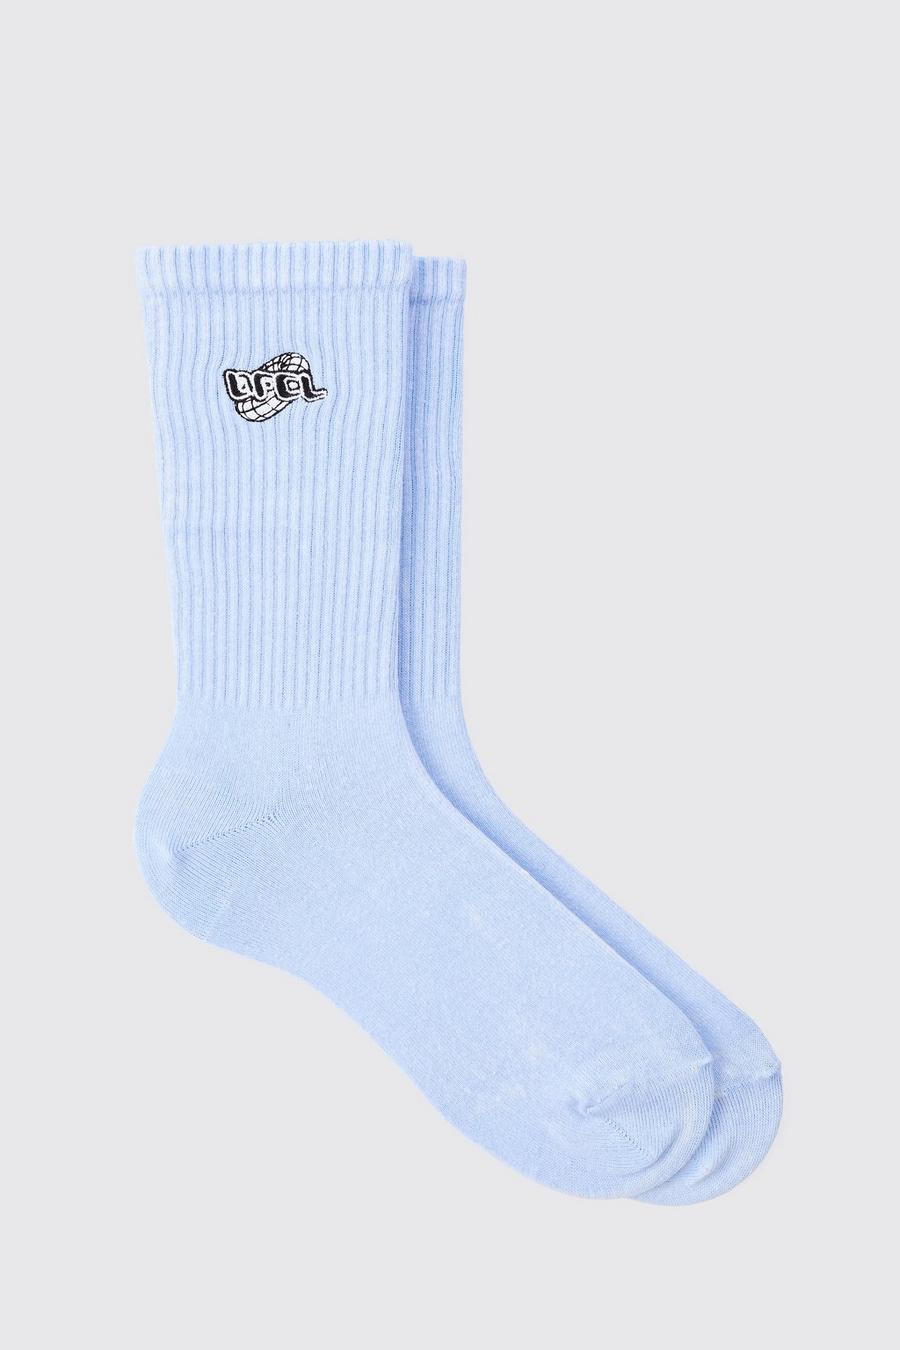 Acid Wash OFCL Embroidered Socks In Light Blue